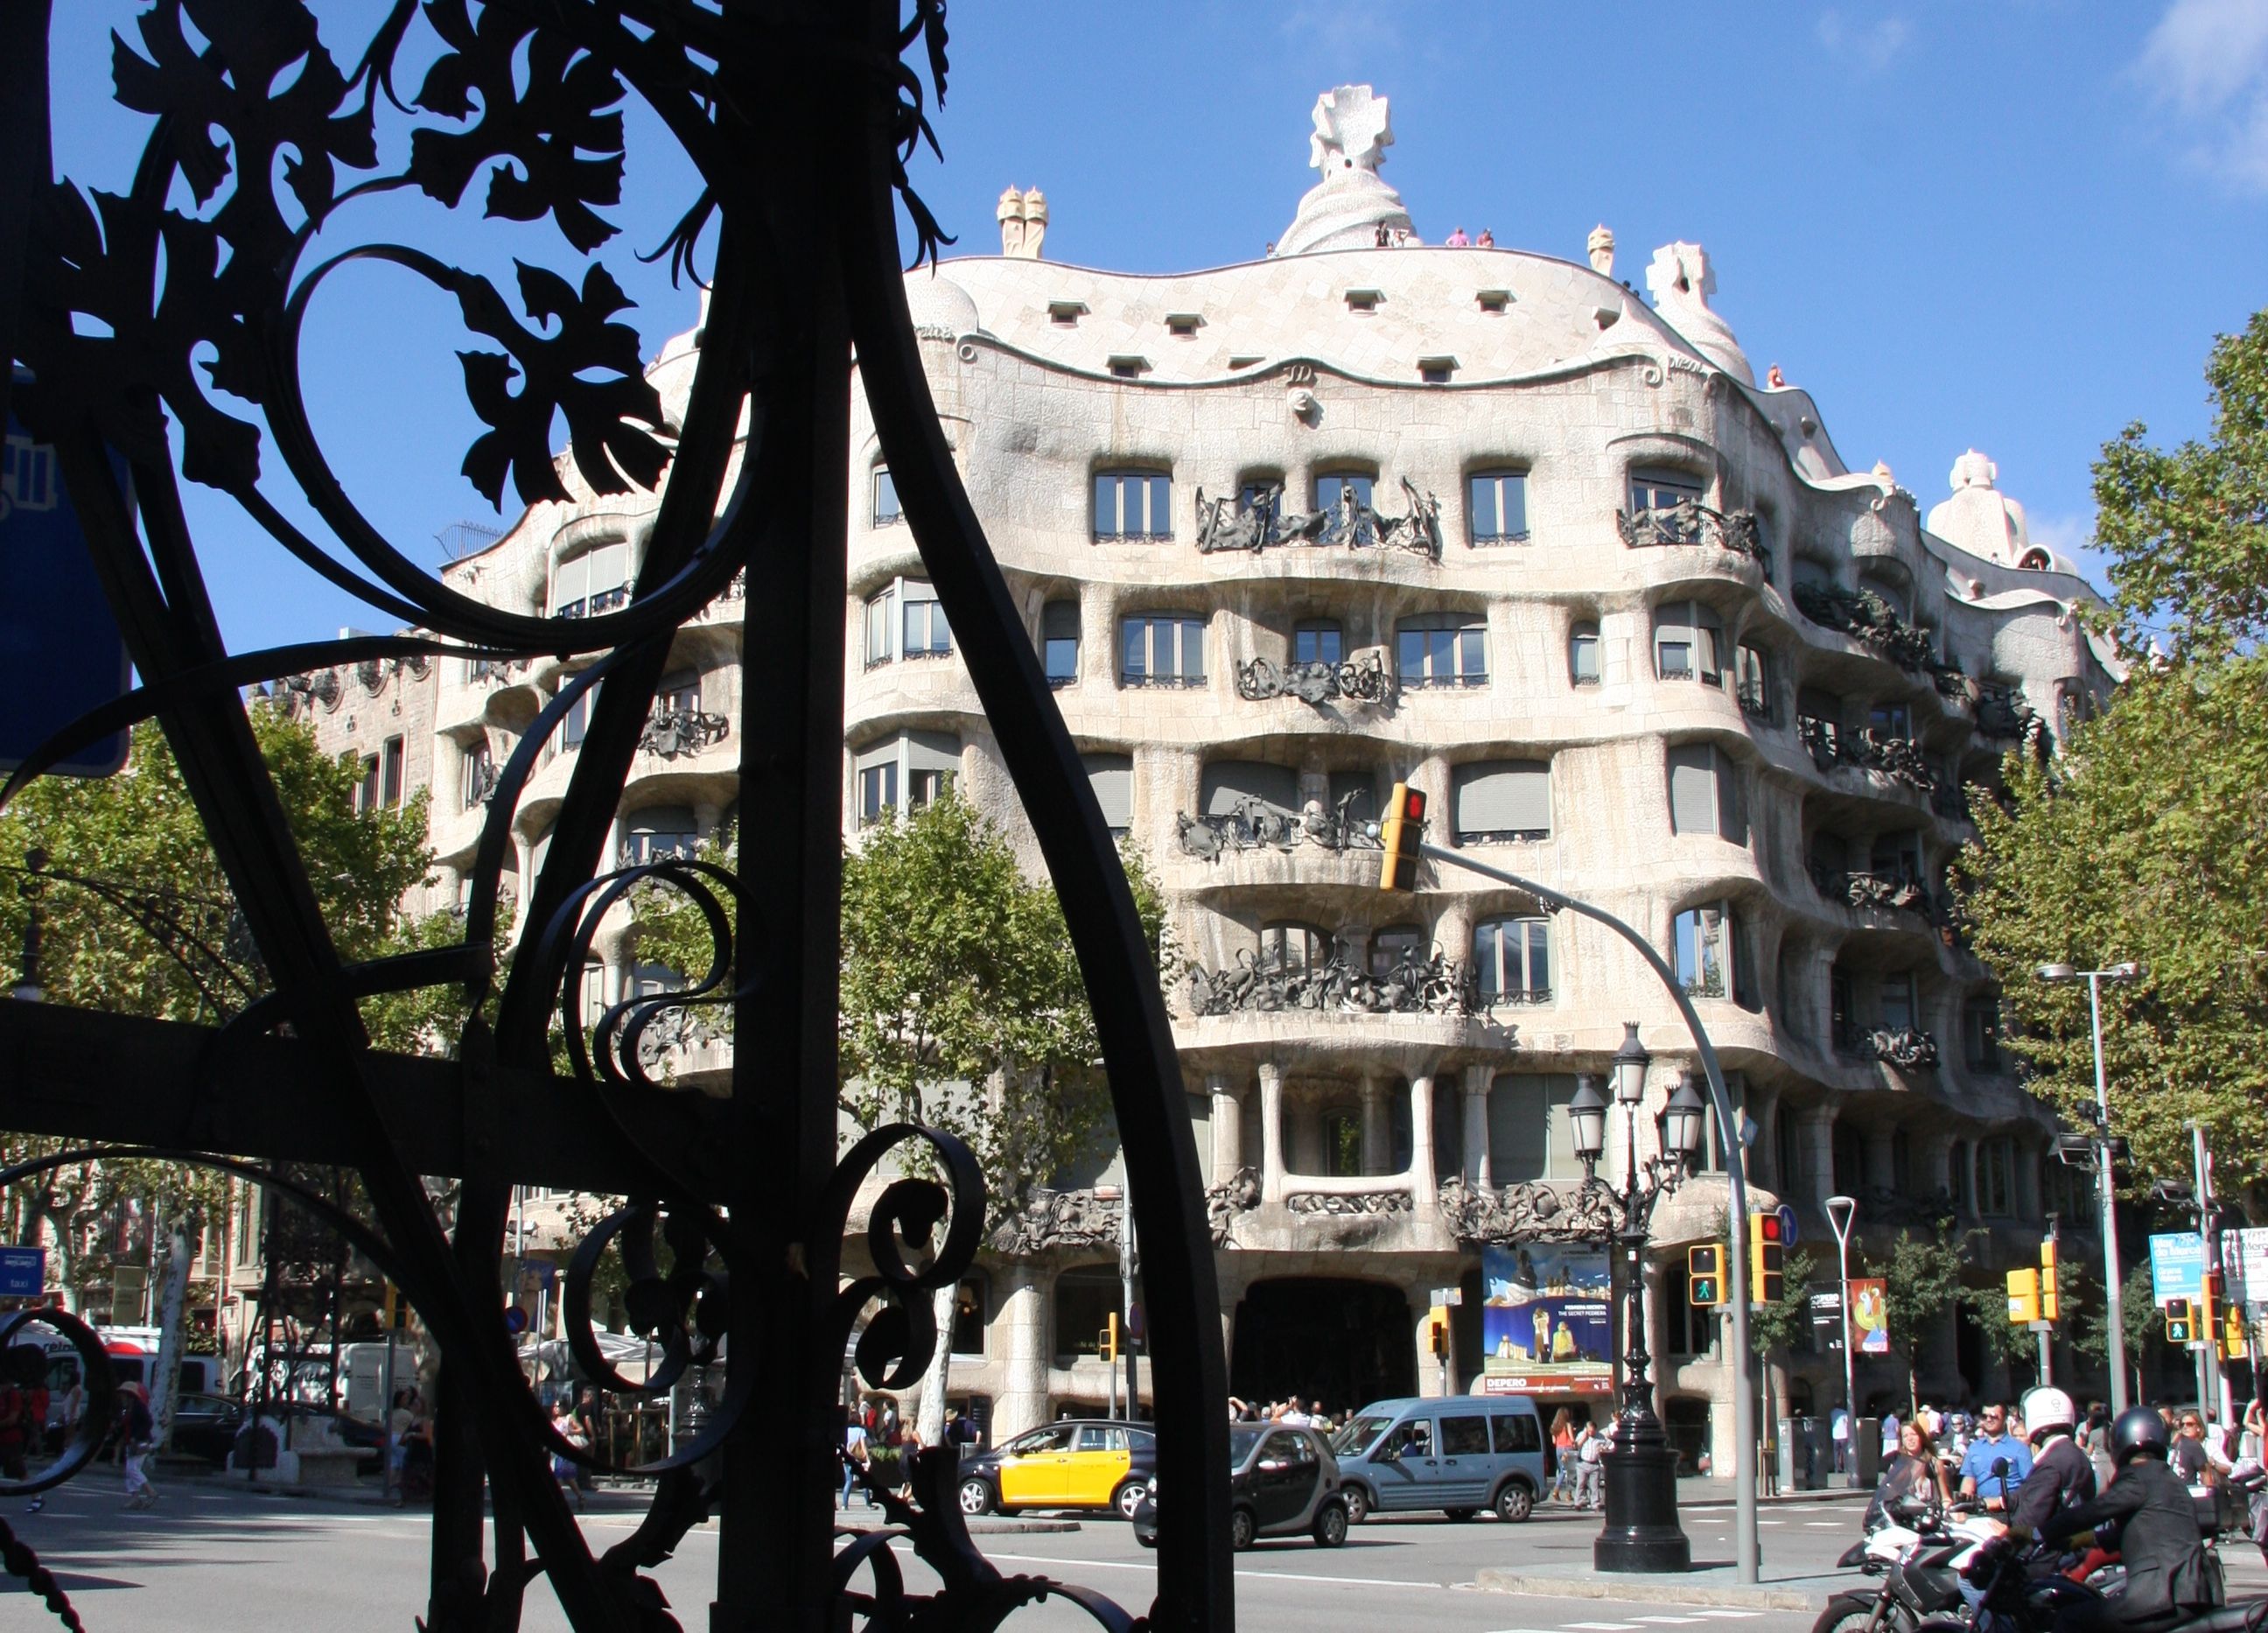 Gaudi's Pedrera building